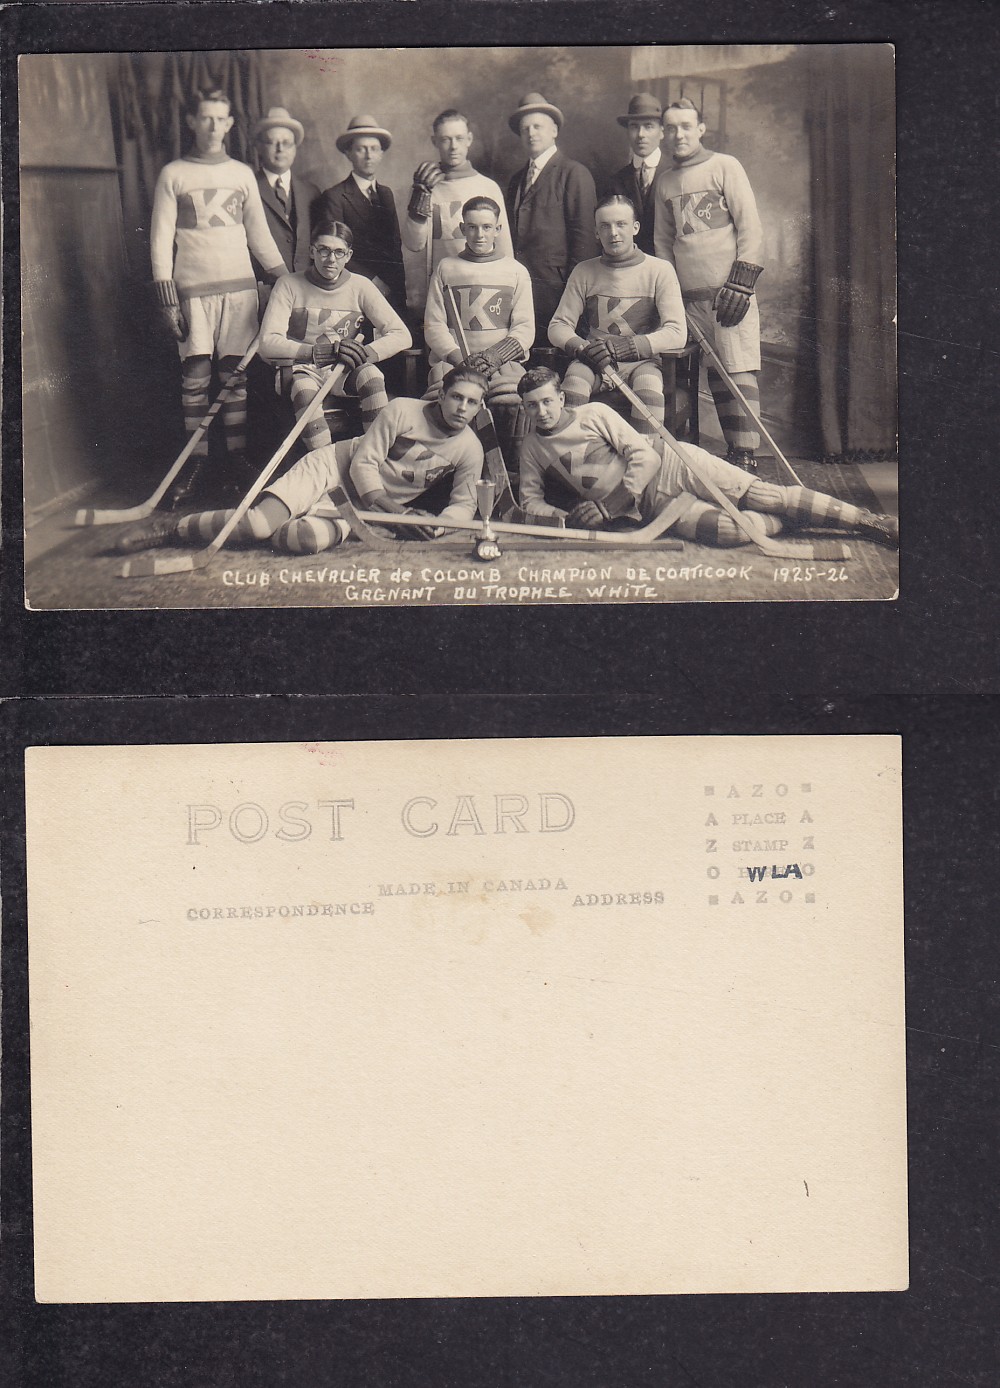 1925-26 COATICOOK HOCKEY TEAM POST CARD photo